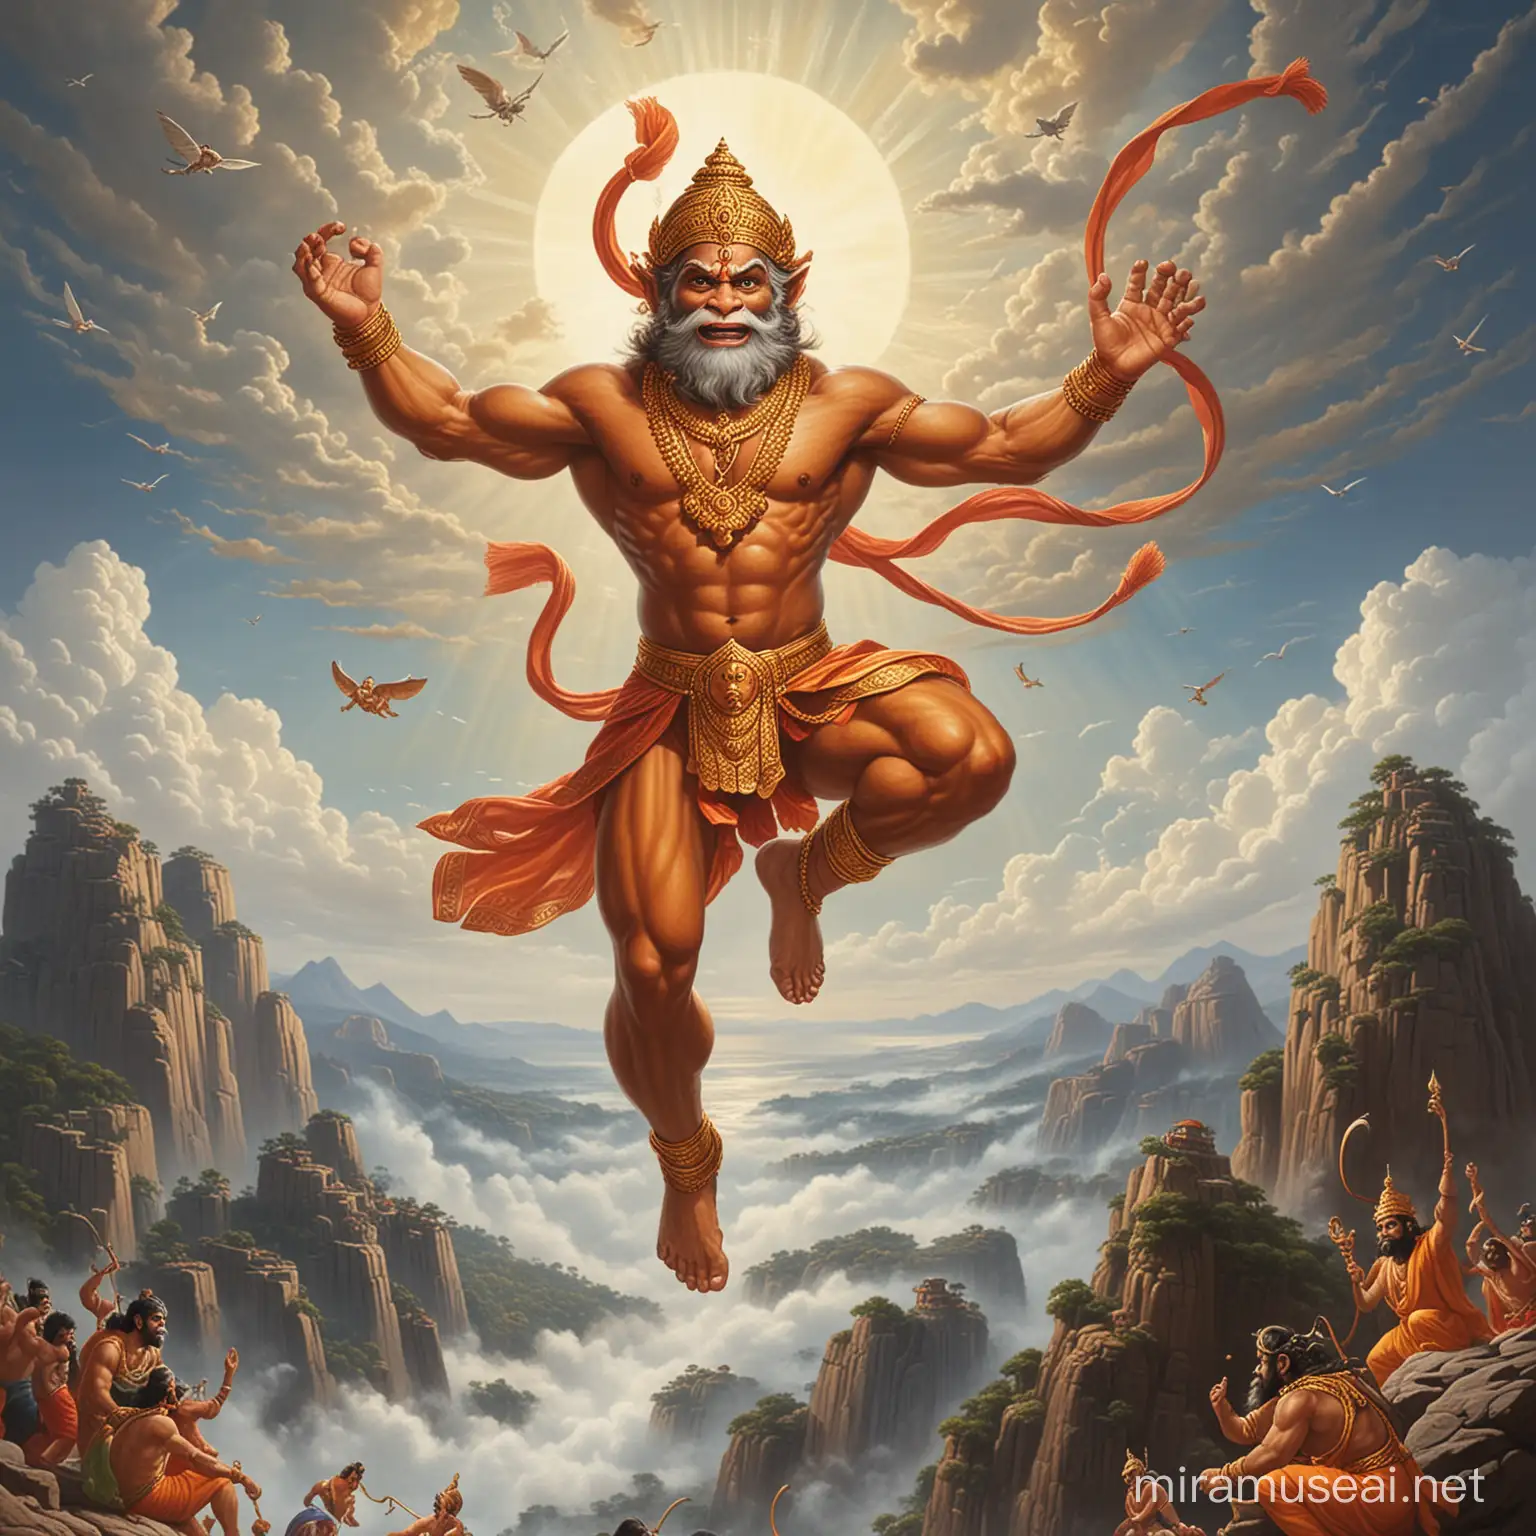 Mythical Hero Hanuman Flying with His Mighty Gada